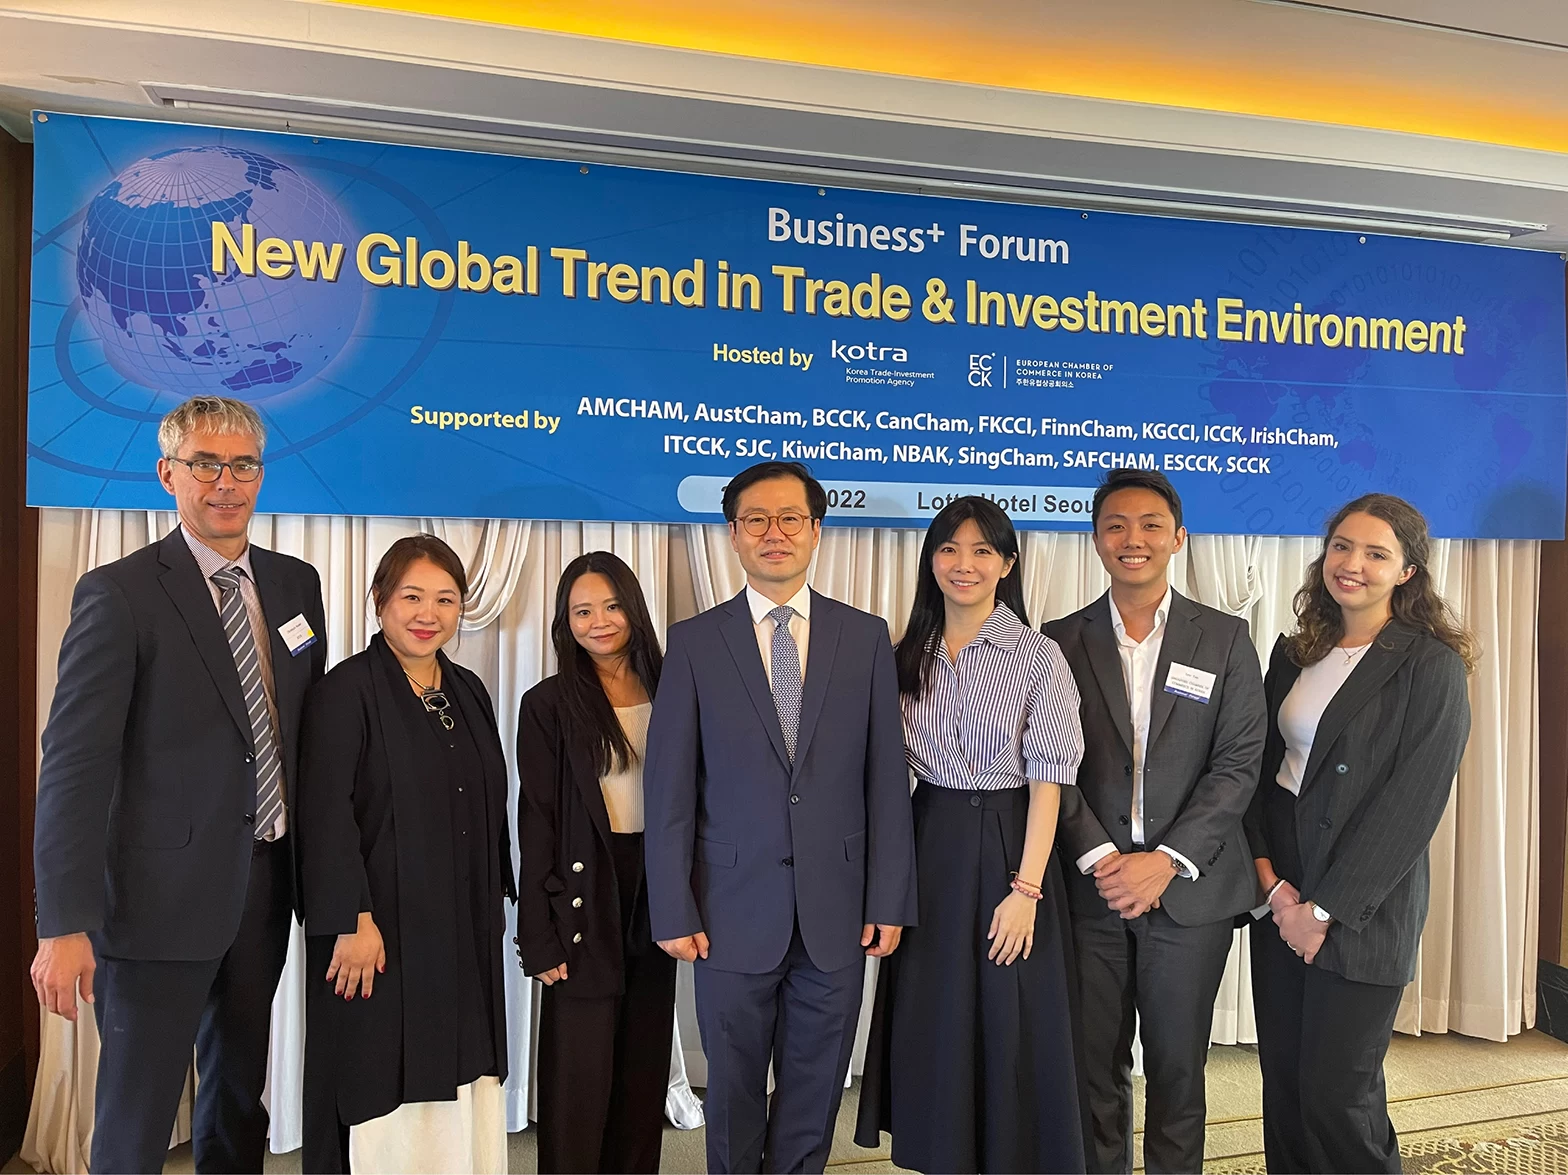 SingCham Korea, SCCK, ECCK & Former Trade Minister, Yeo Han Koo